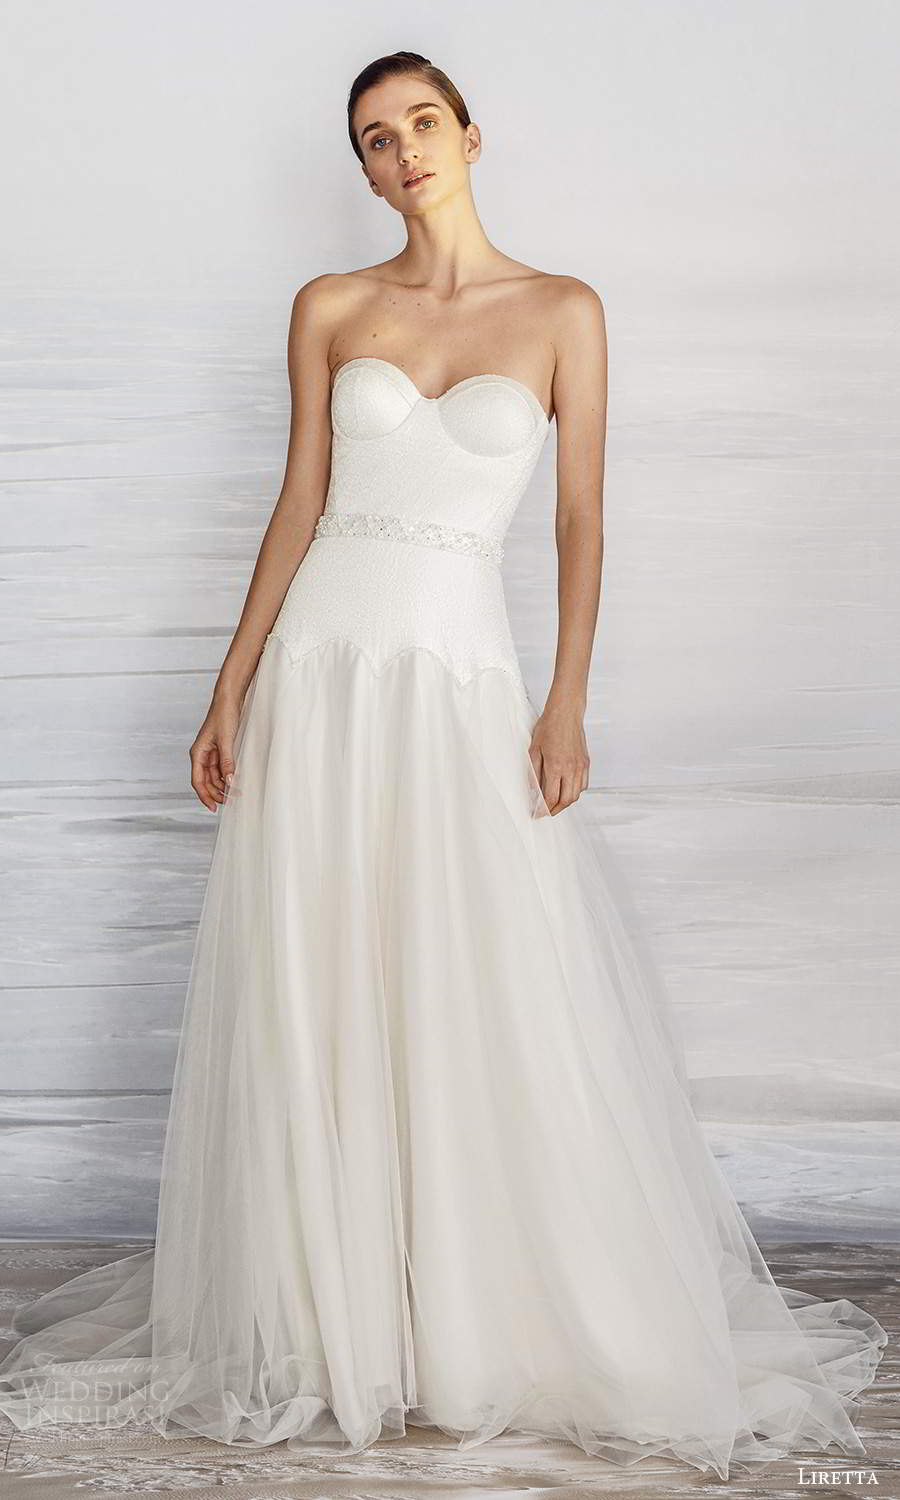 liretta 2021 bridal strapless sweetheart clean minimalist a line wedding dress chapel train (9) mv